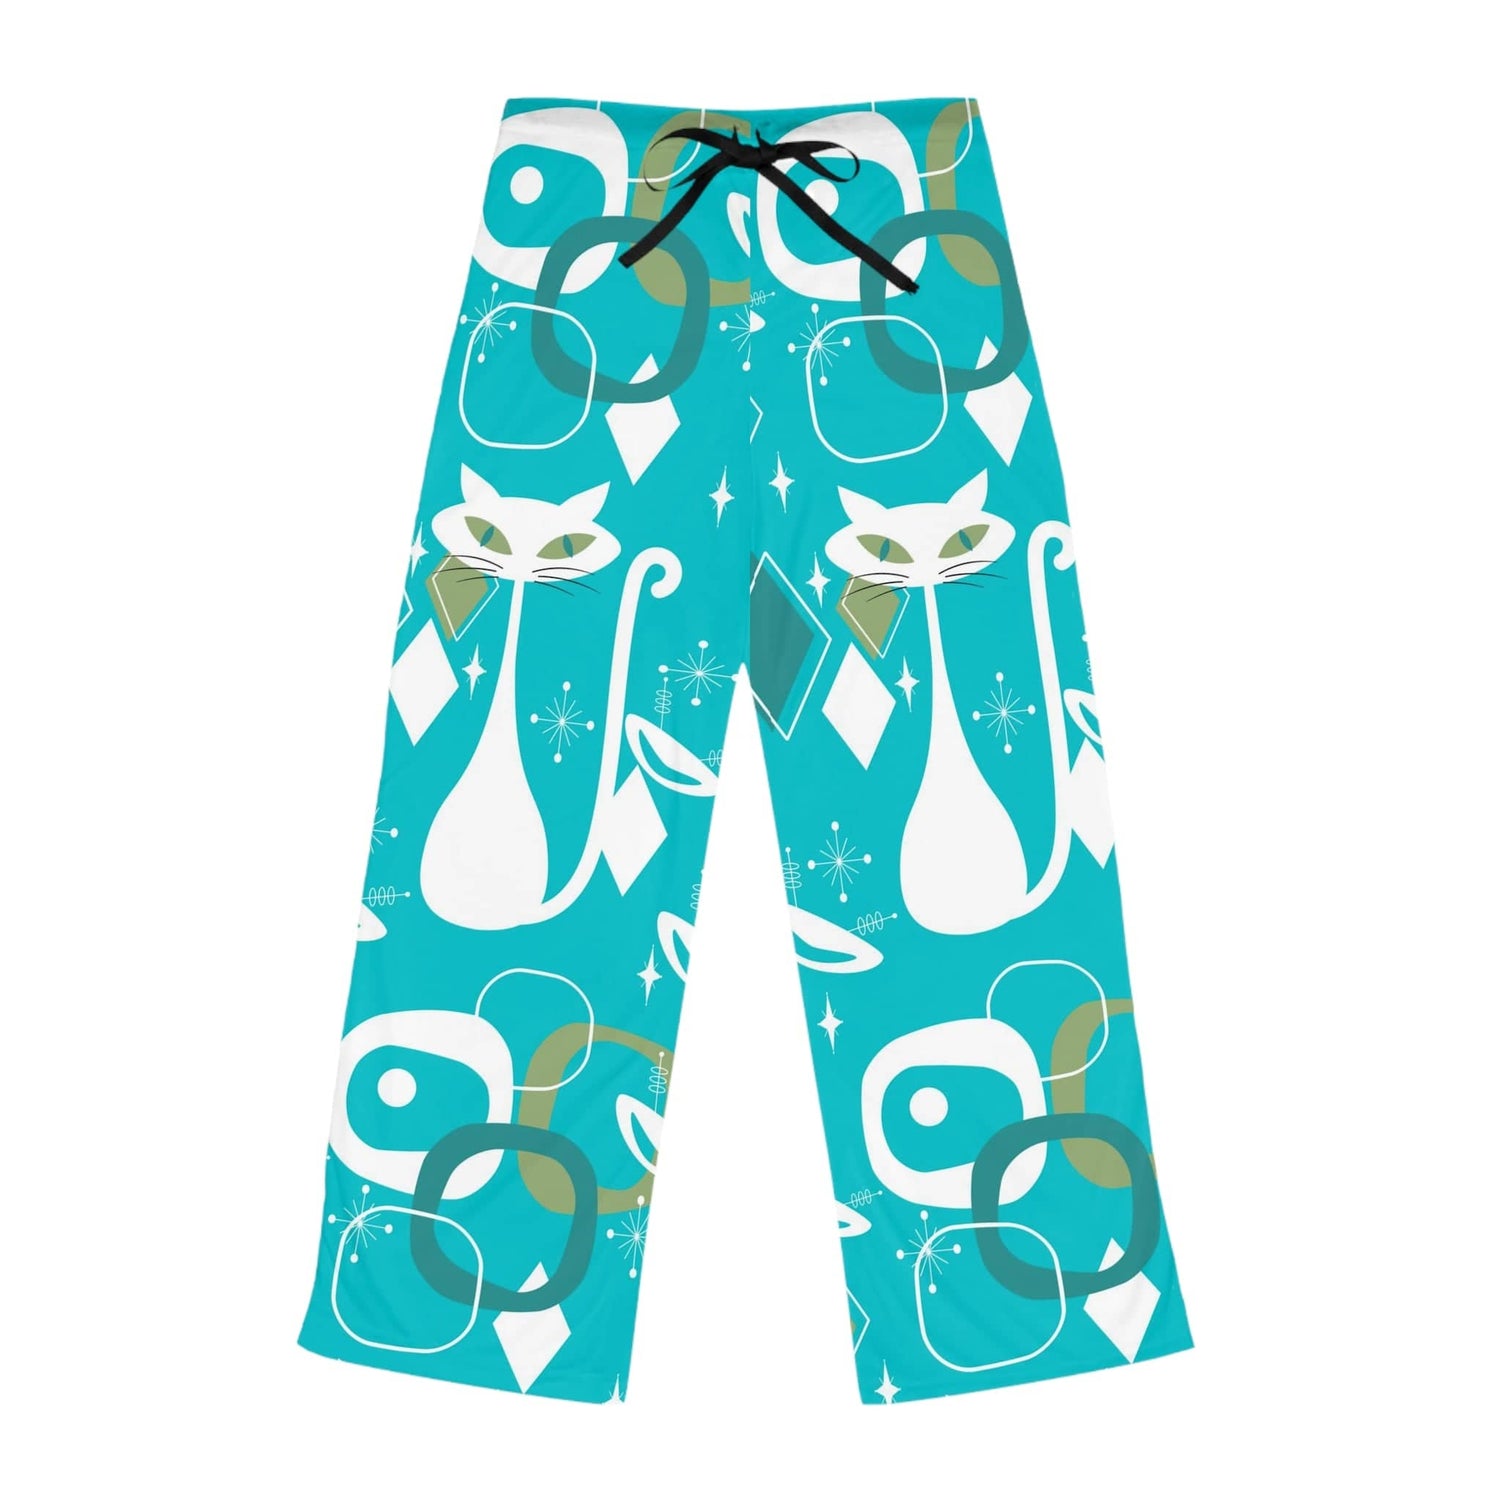 Sleep & Co girls pull on fuzzy blue/white Cat Christmas pajama pants, Large